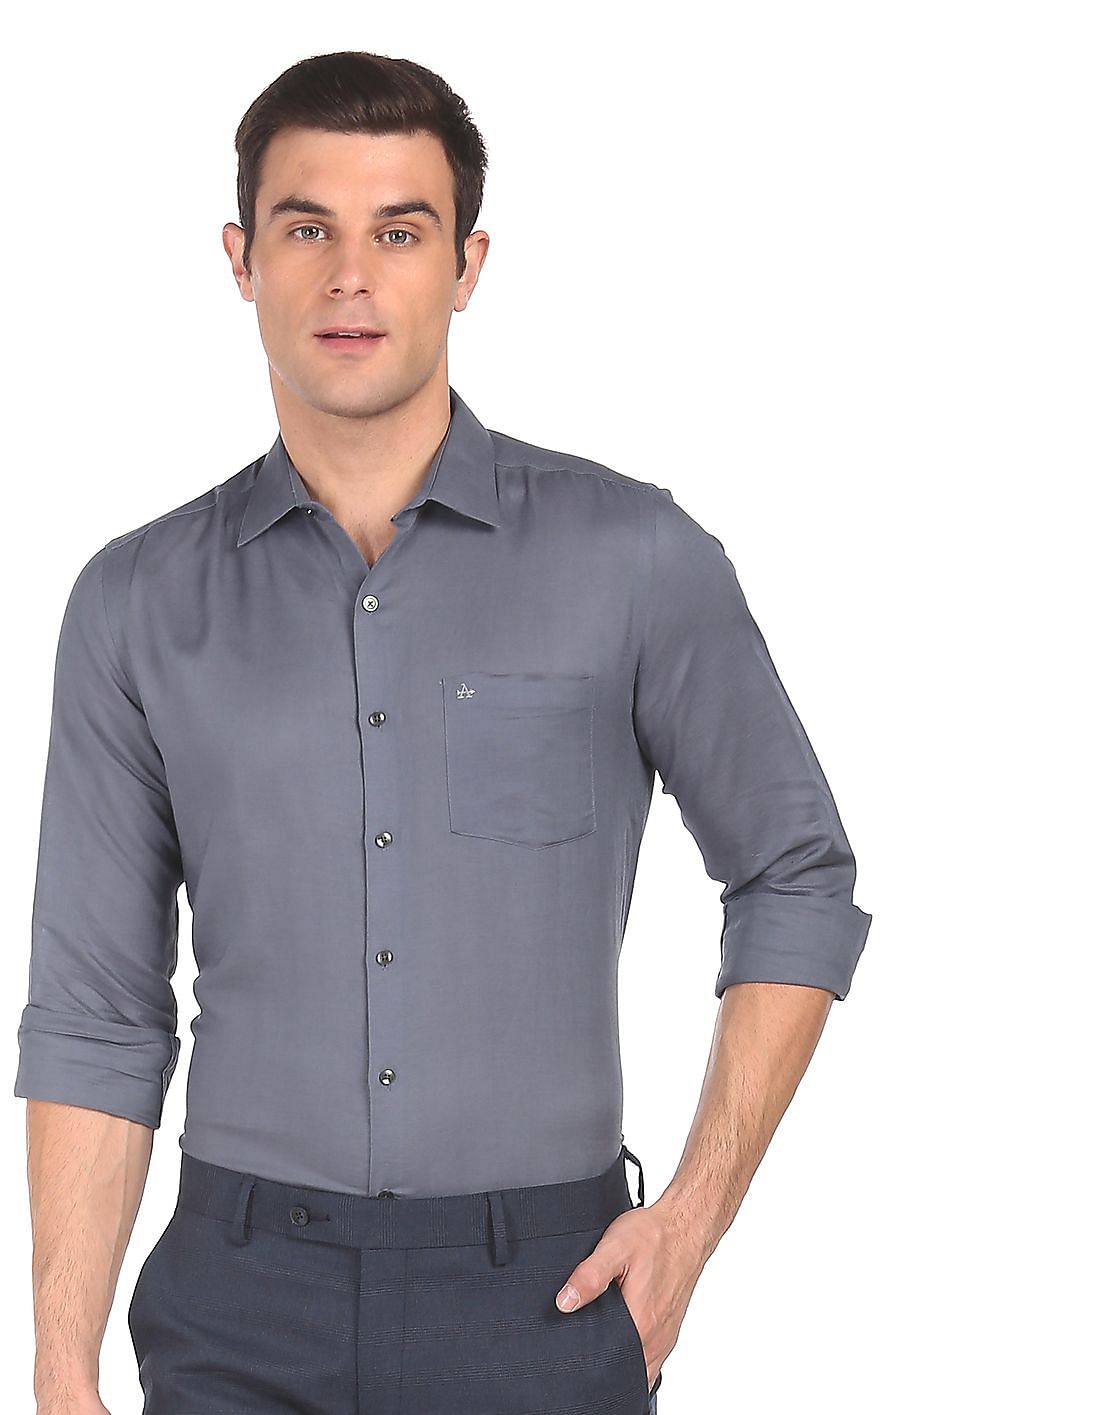 Buy Arrow Spread Collar Solid Formal Shirt - NNNOW.com